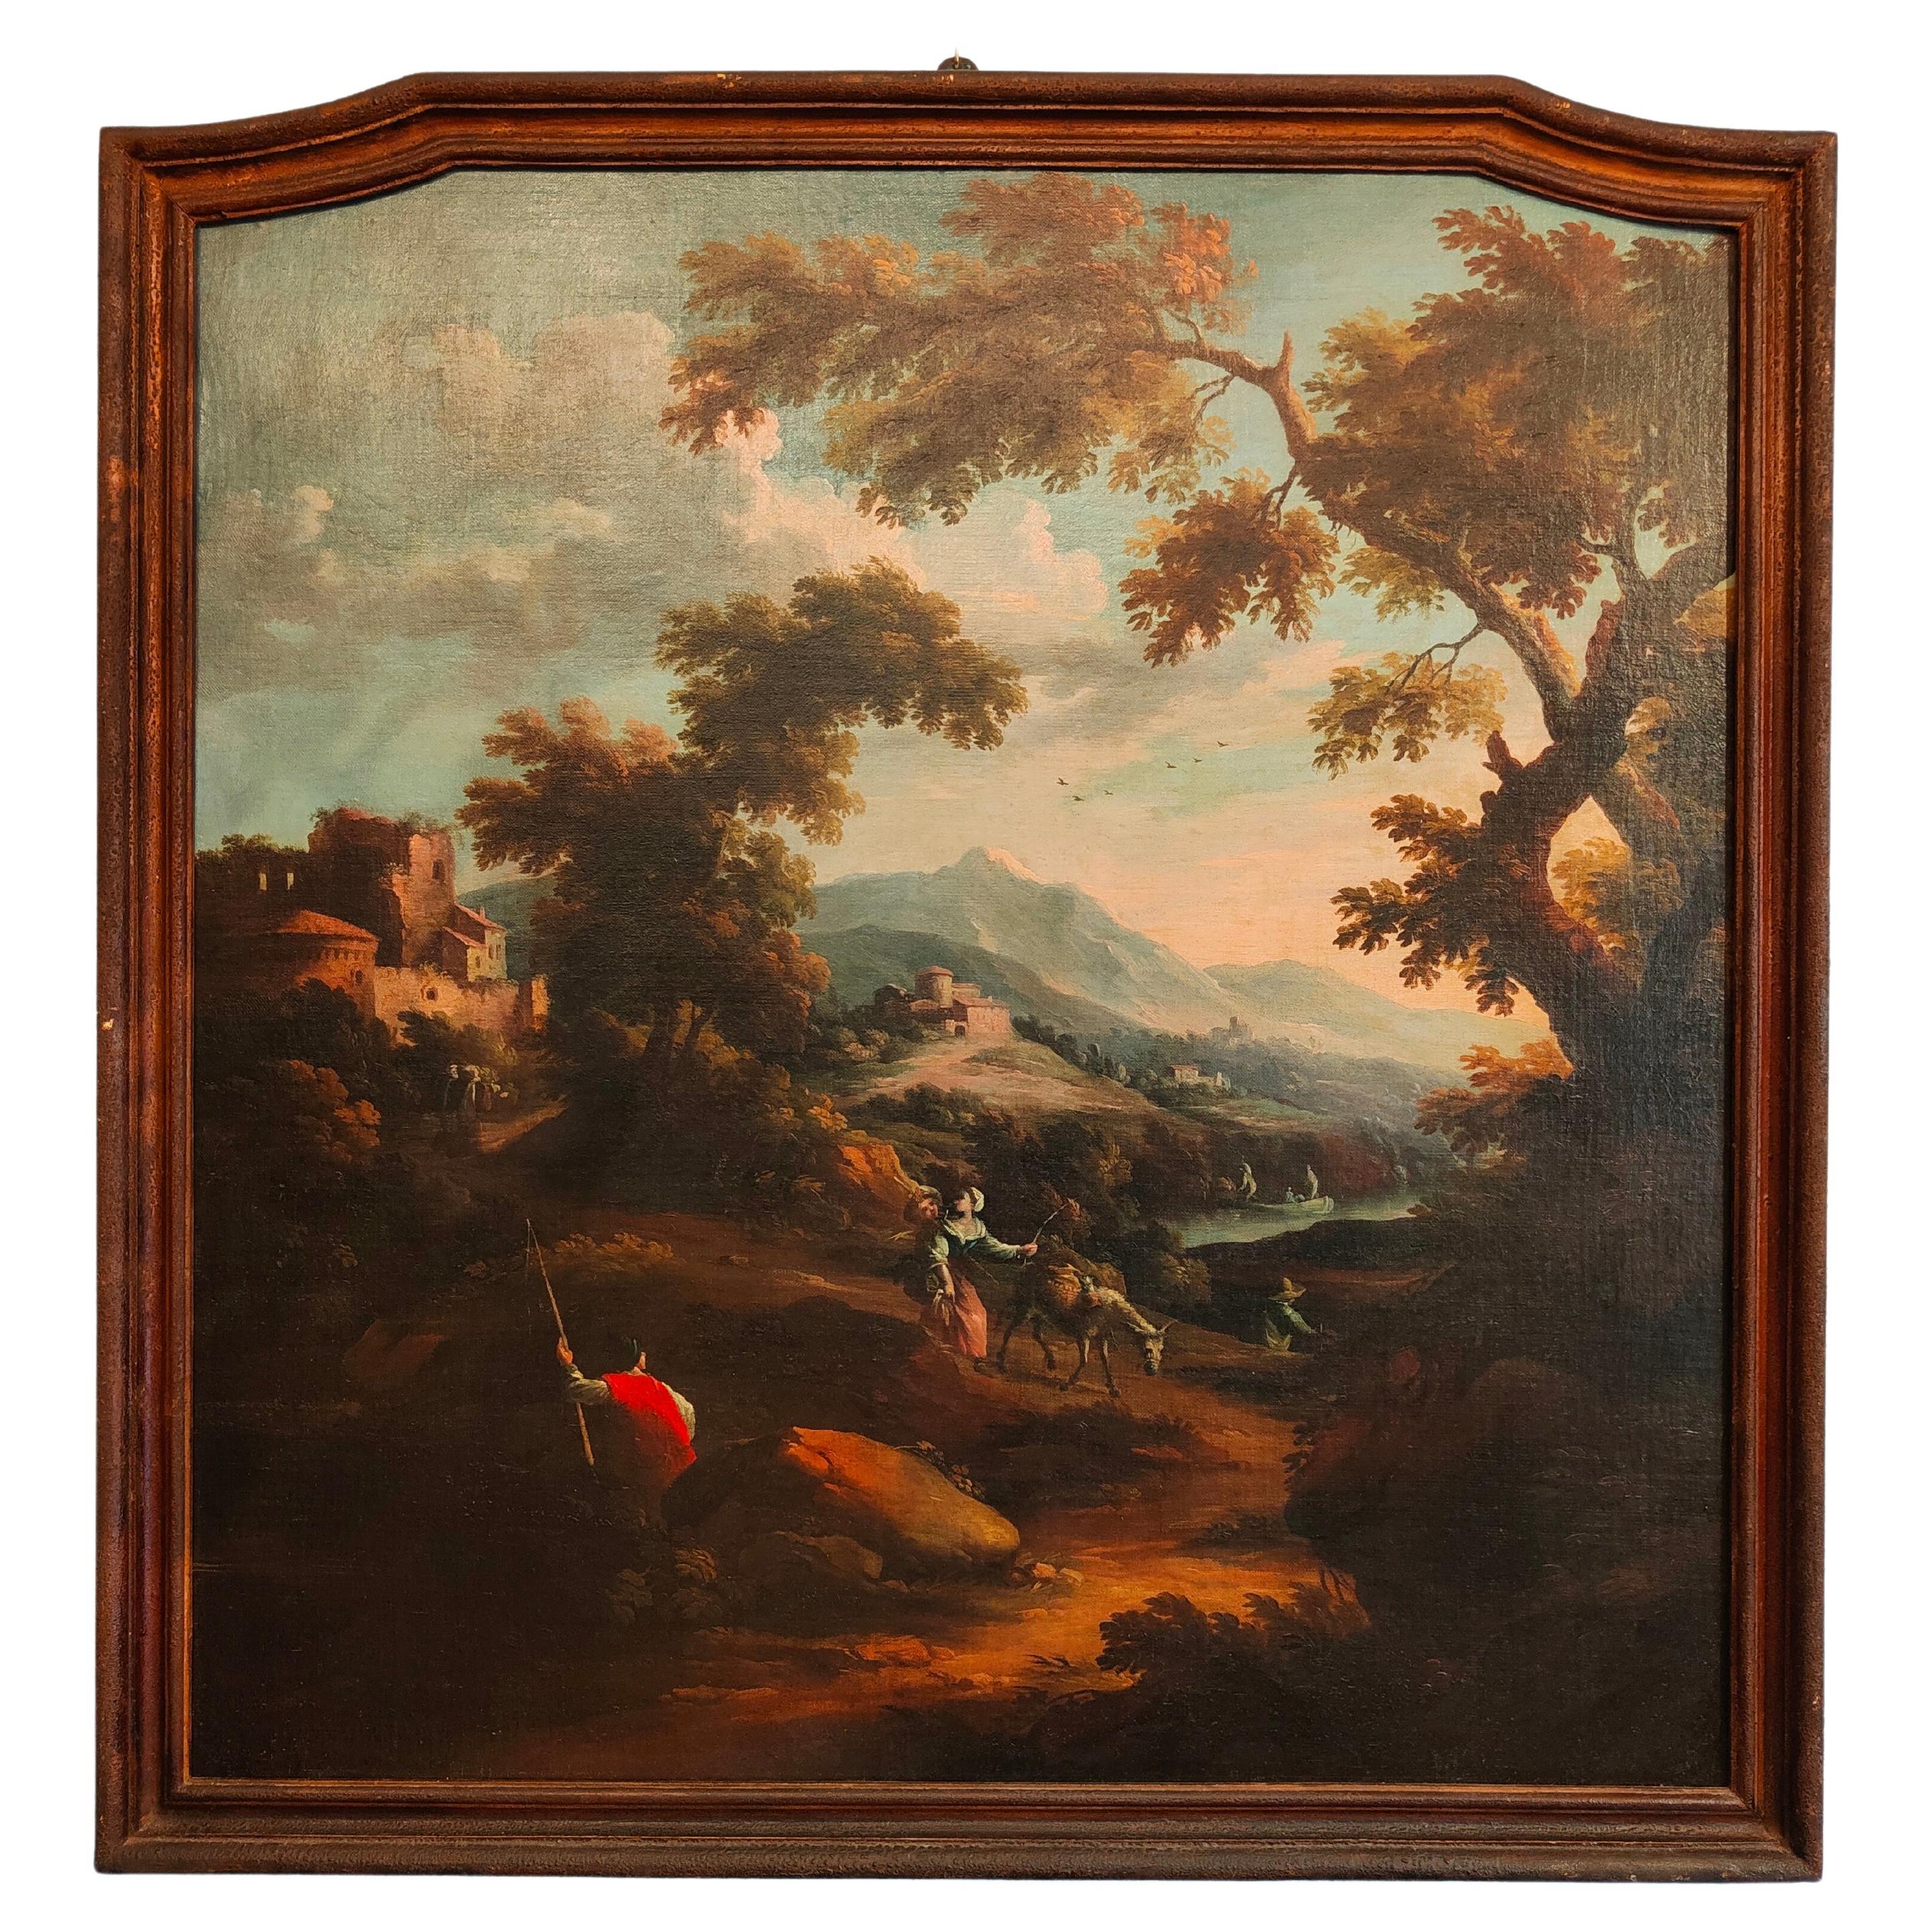 Italienische Malerei des Malers Scipione Cignaroli aus dem 18. Jahrhundert